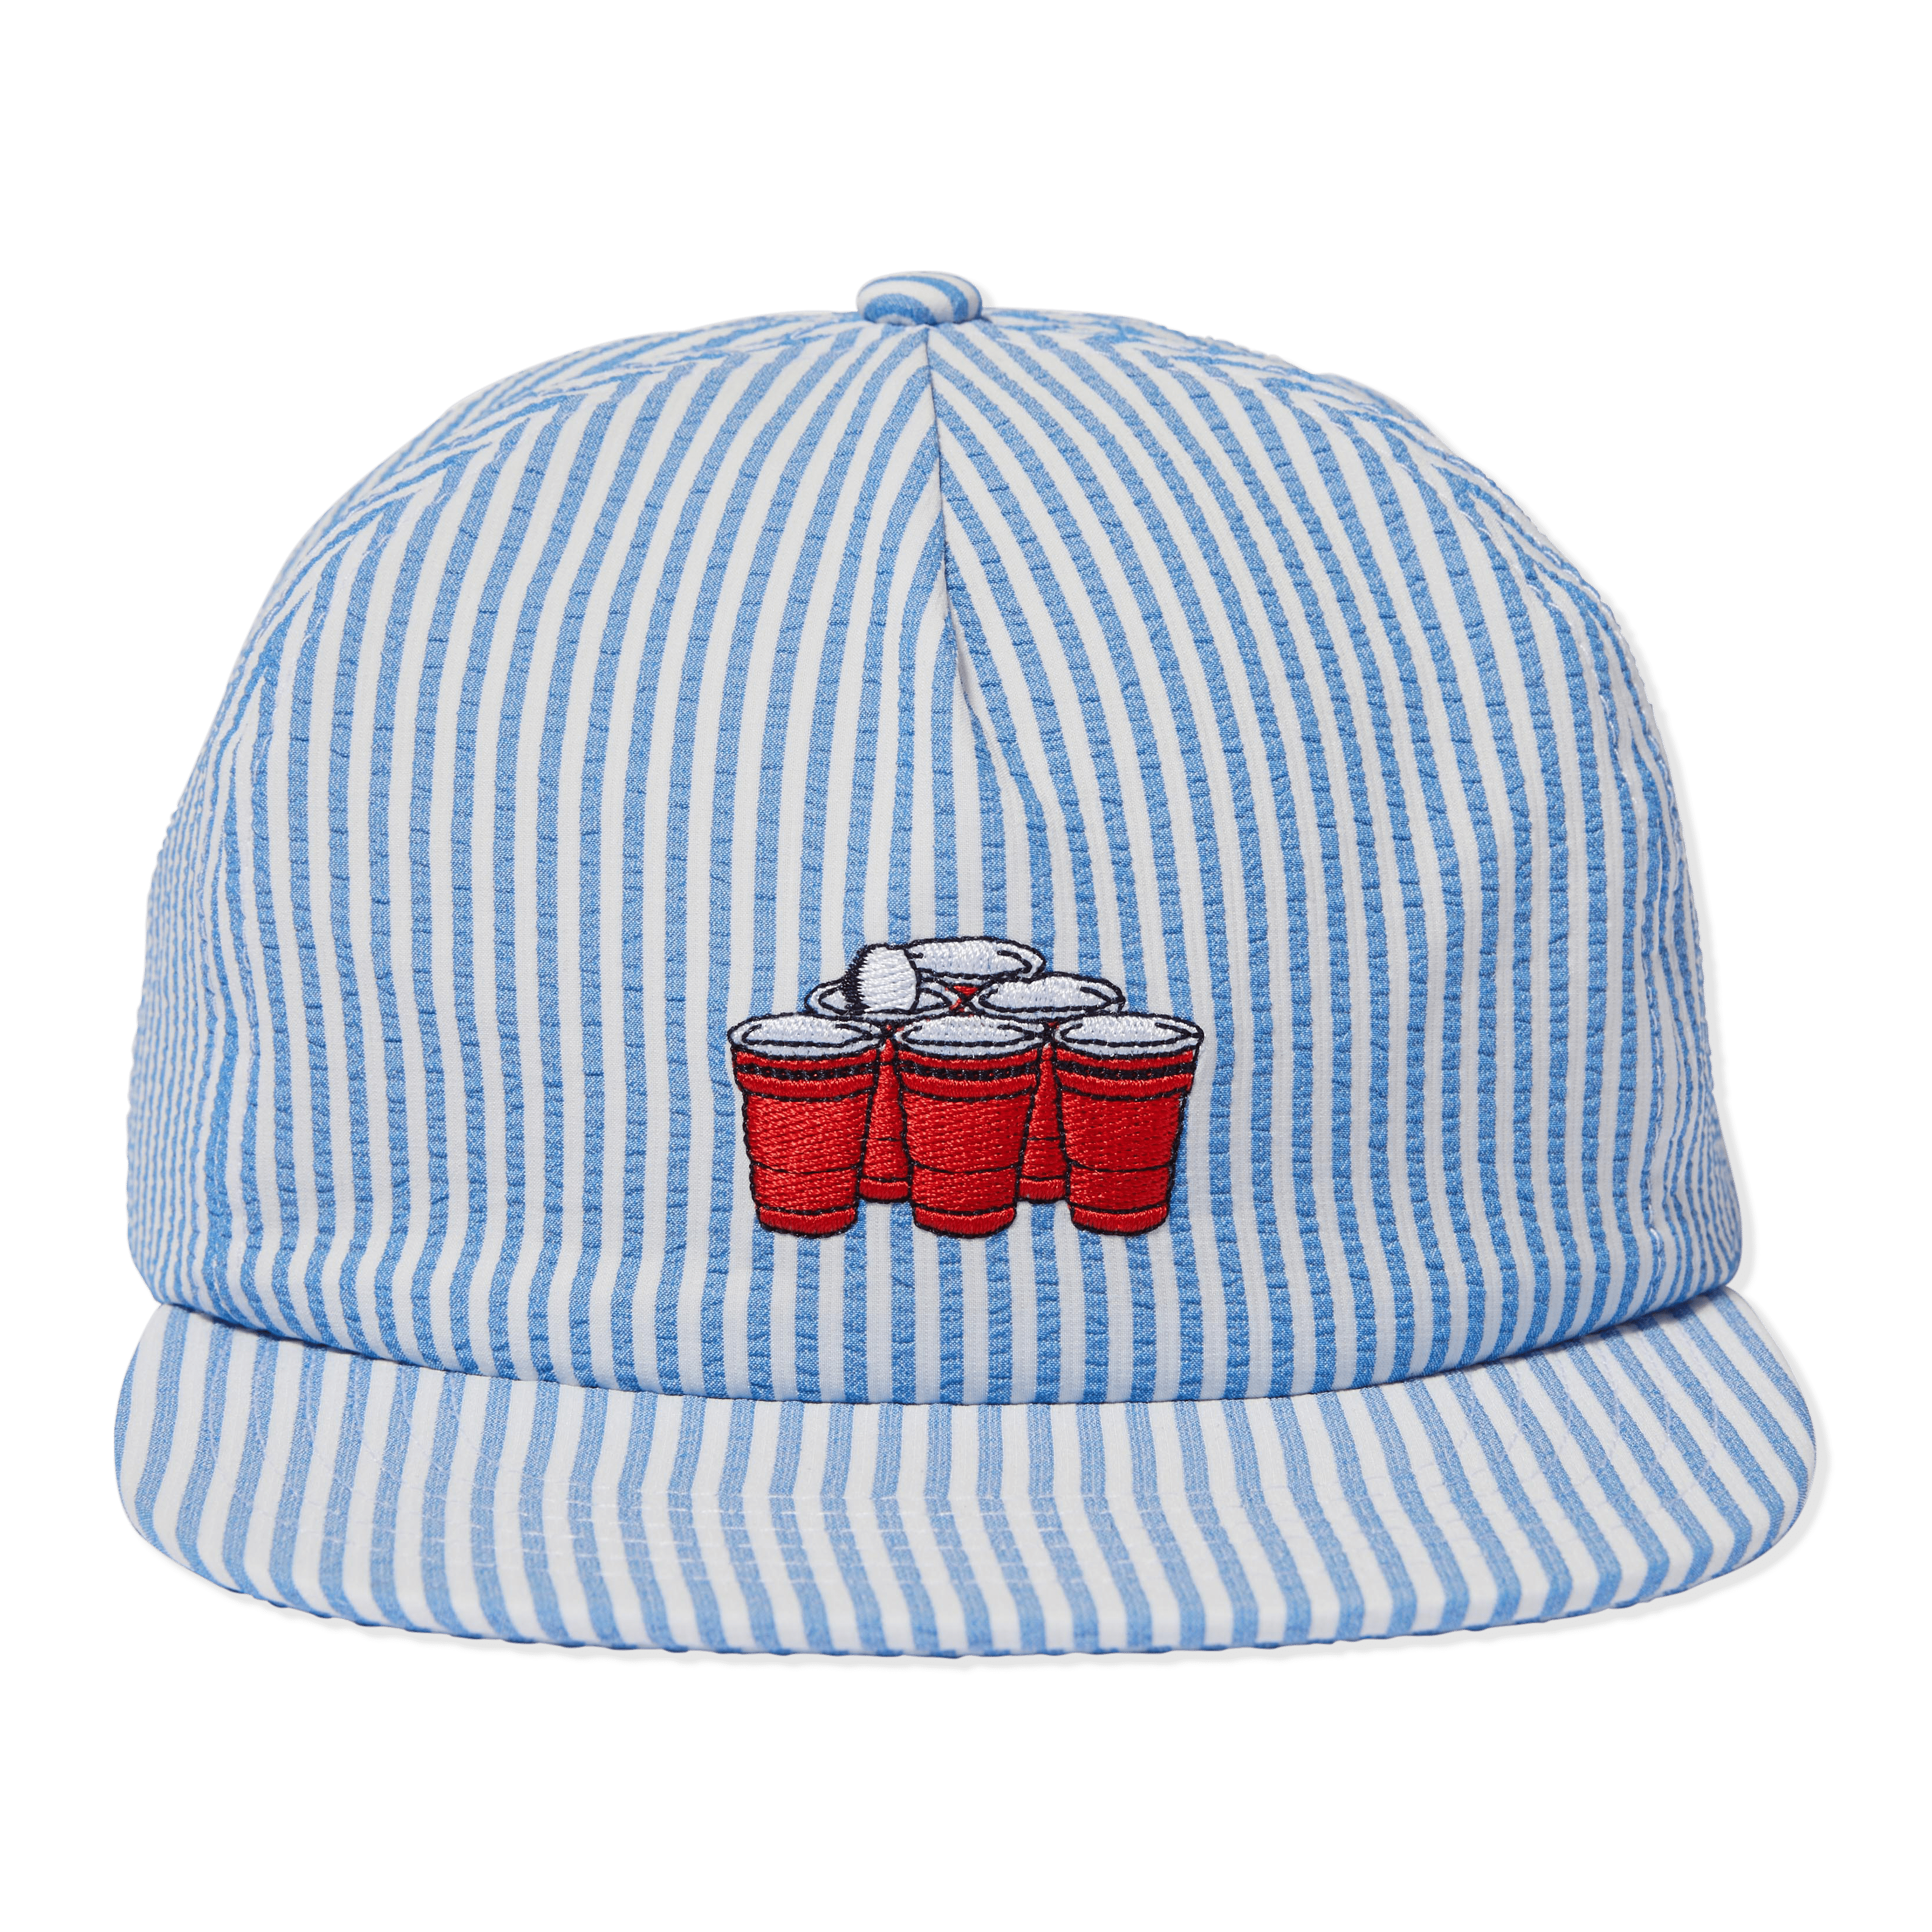 ROUNDERS CUP HAT - LIGHT BLUE HATS PARTY PANTS 